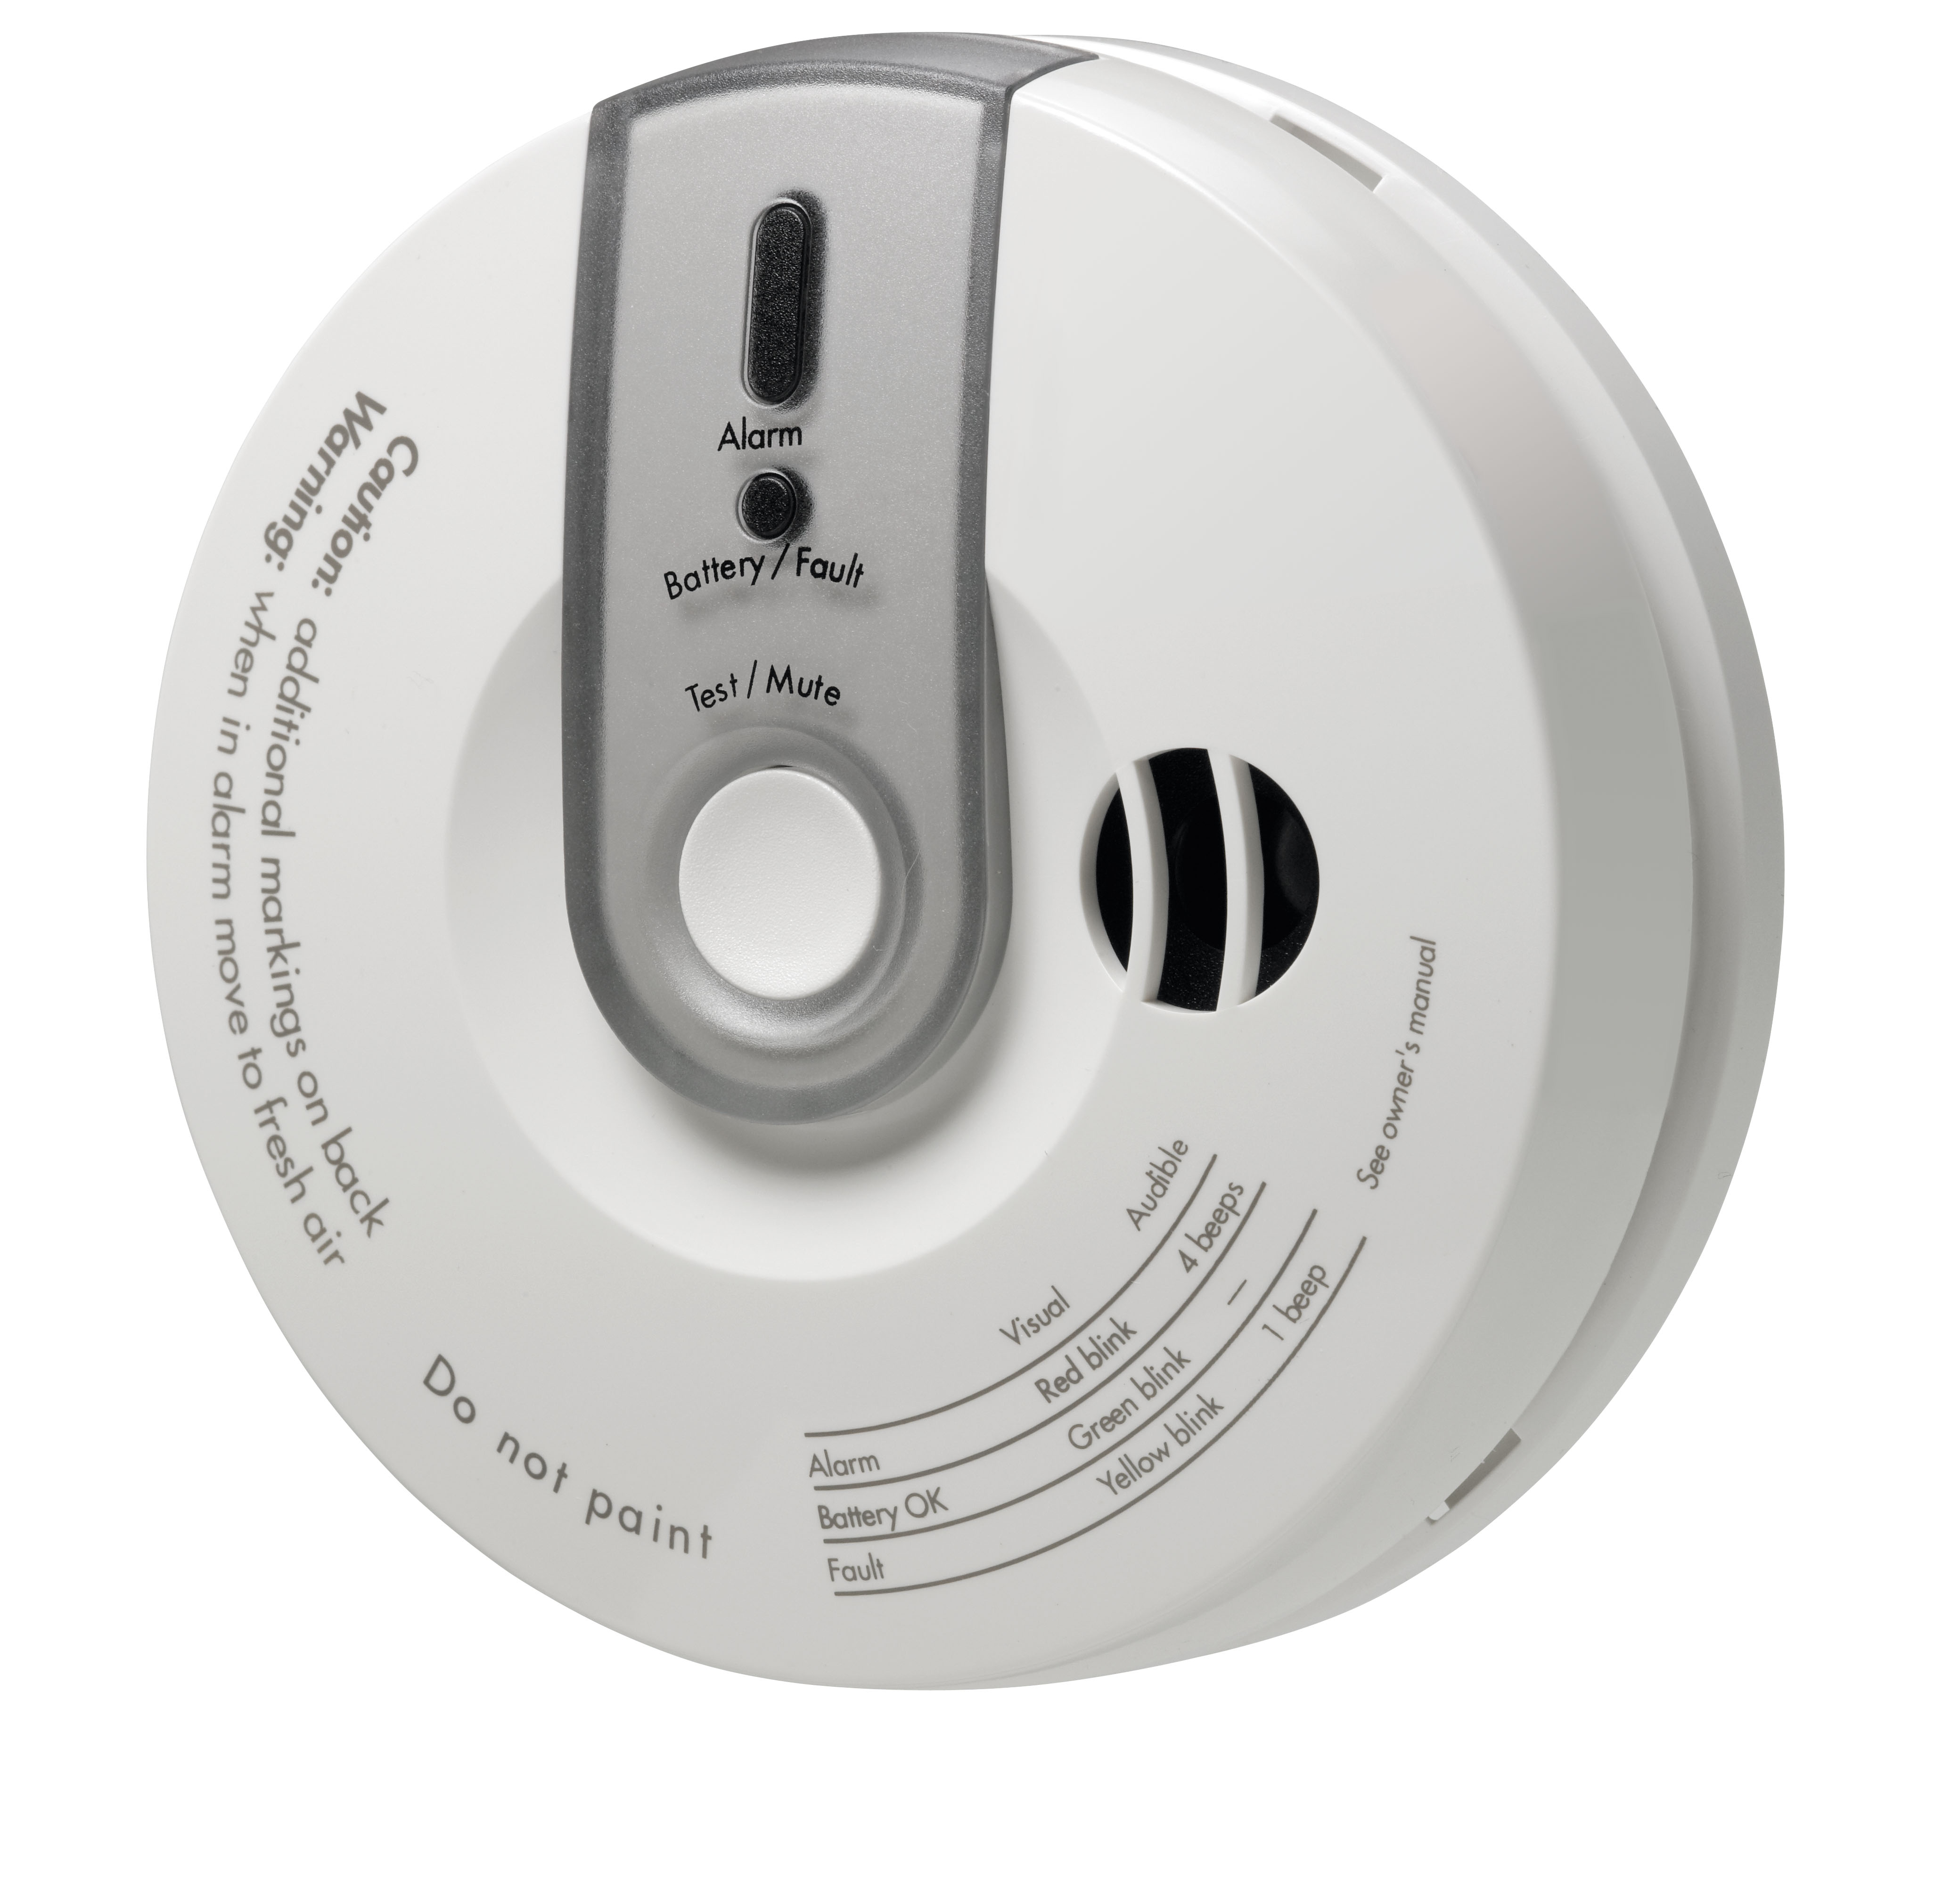 Wireless Carbon Monoxide Detector Dsc Home Security Security Products Dsc 0322